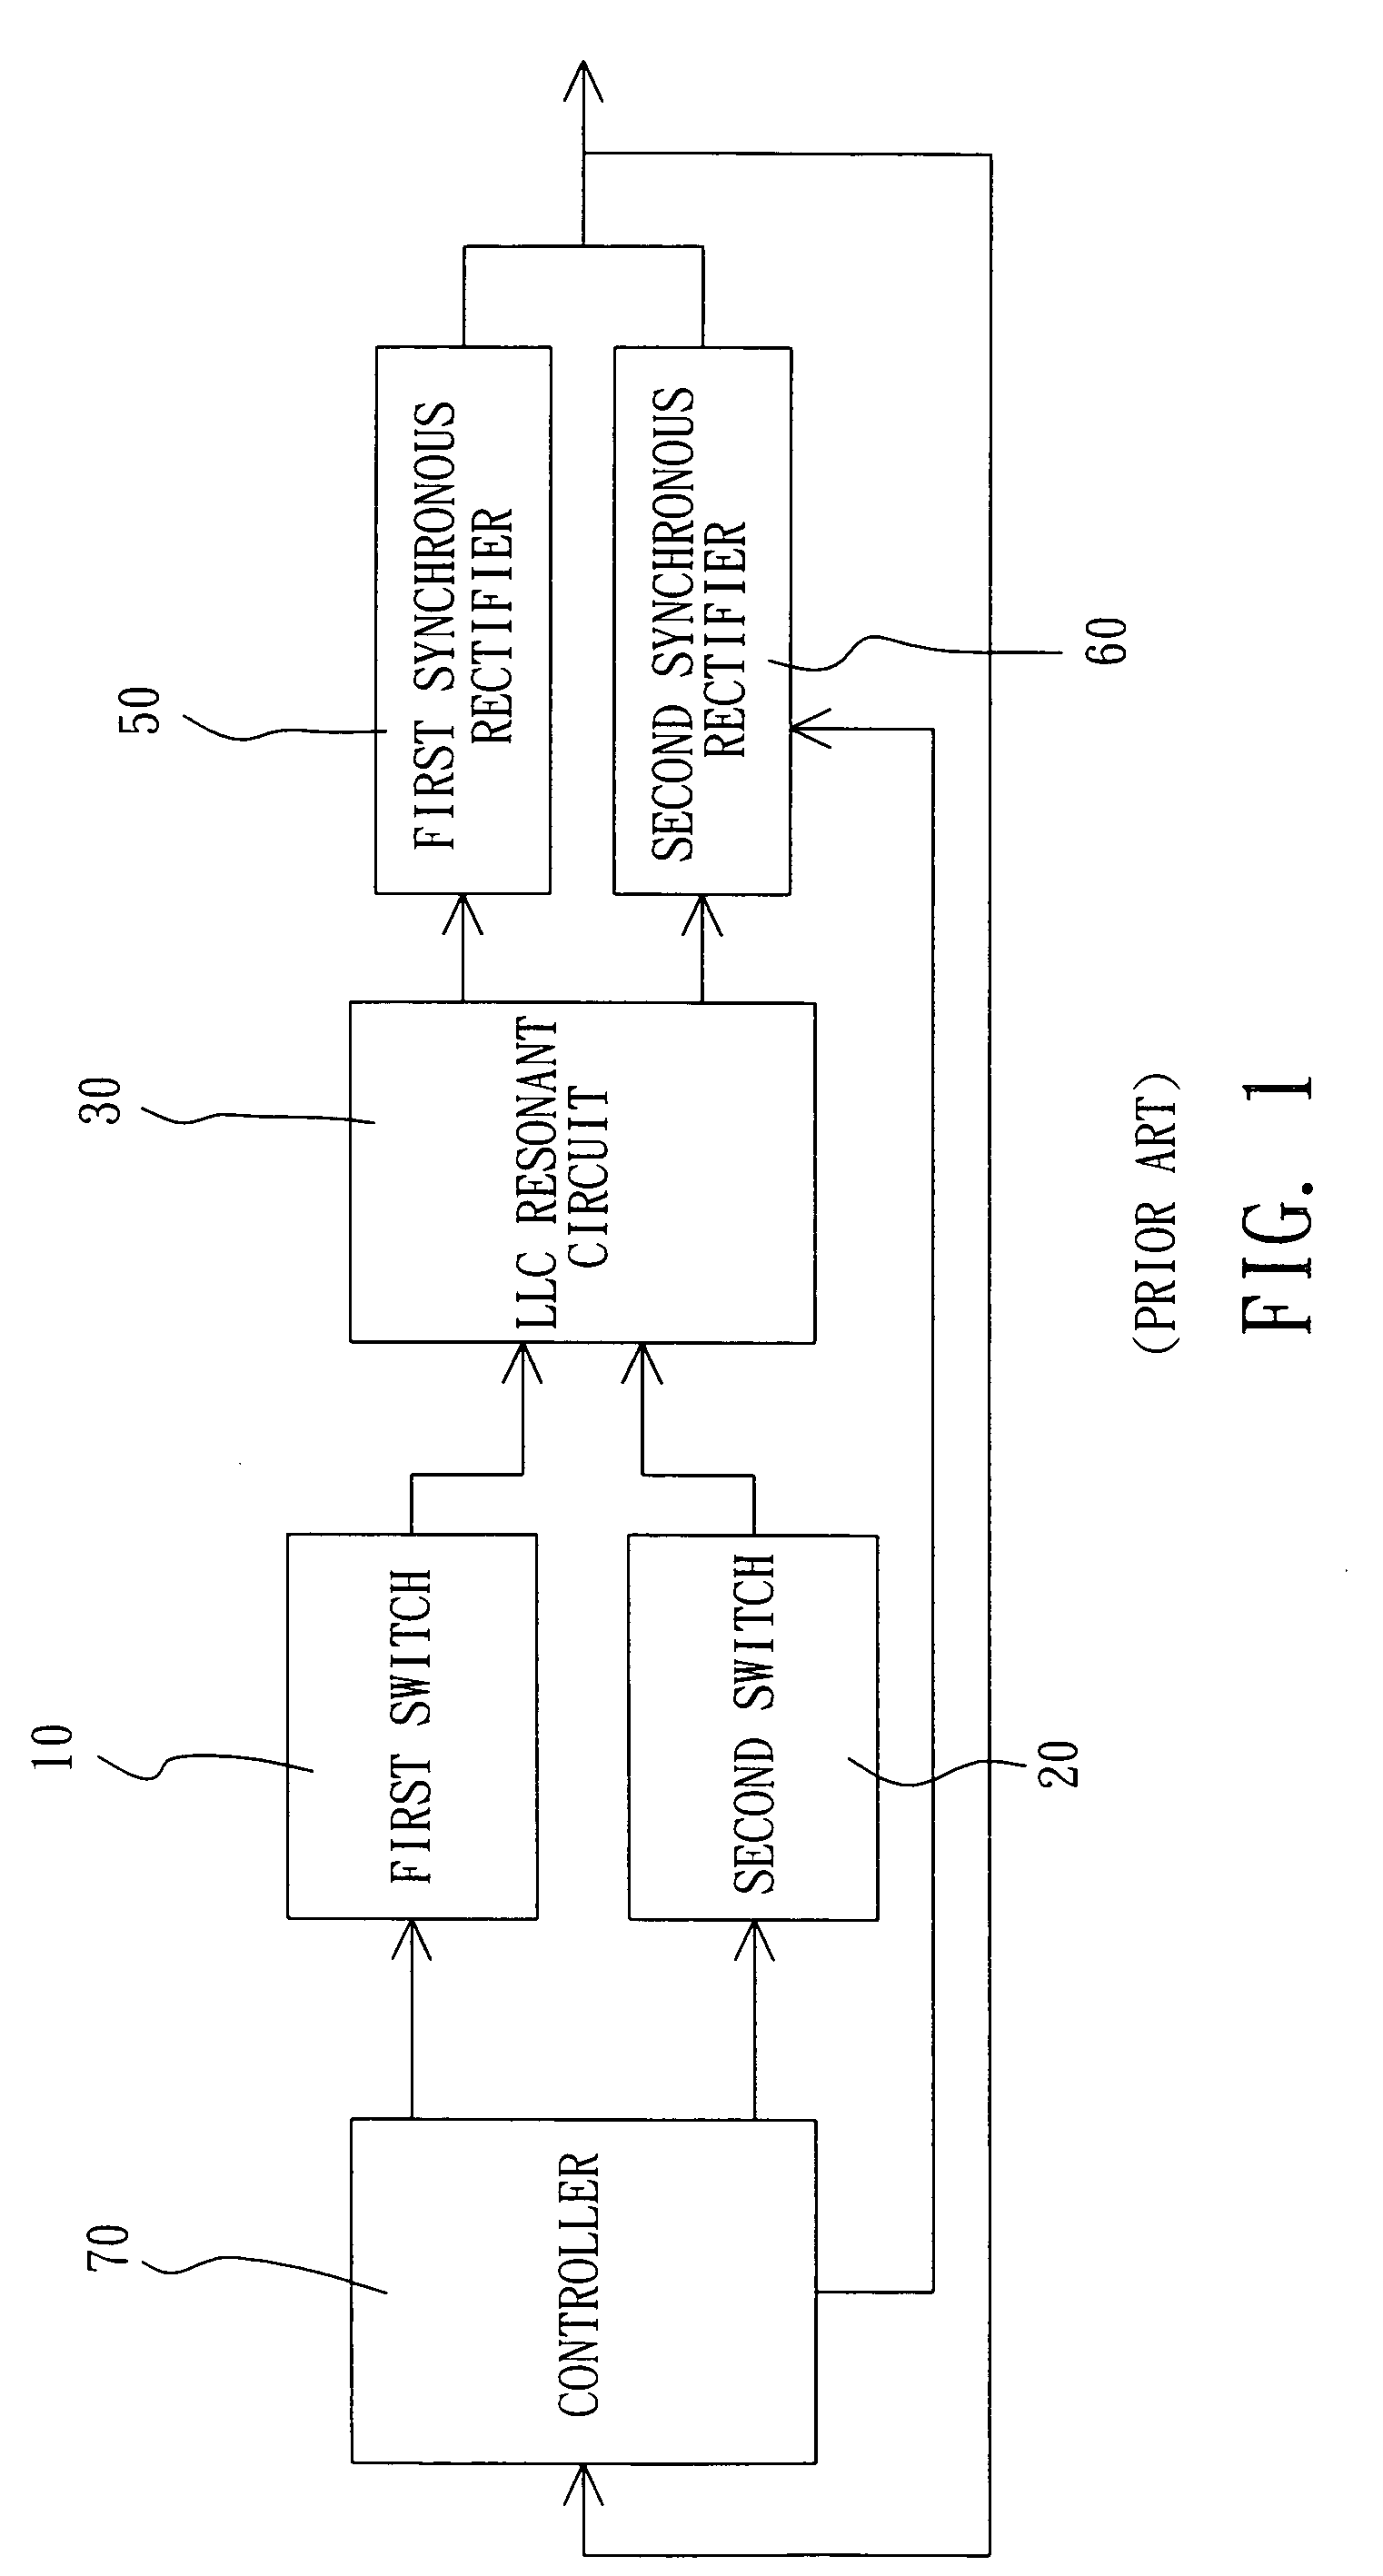 Half-bridge LLC resonant converter with a synchronous rectification function